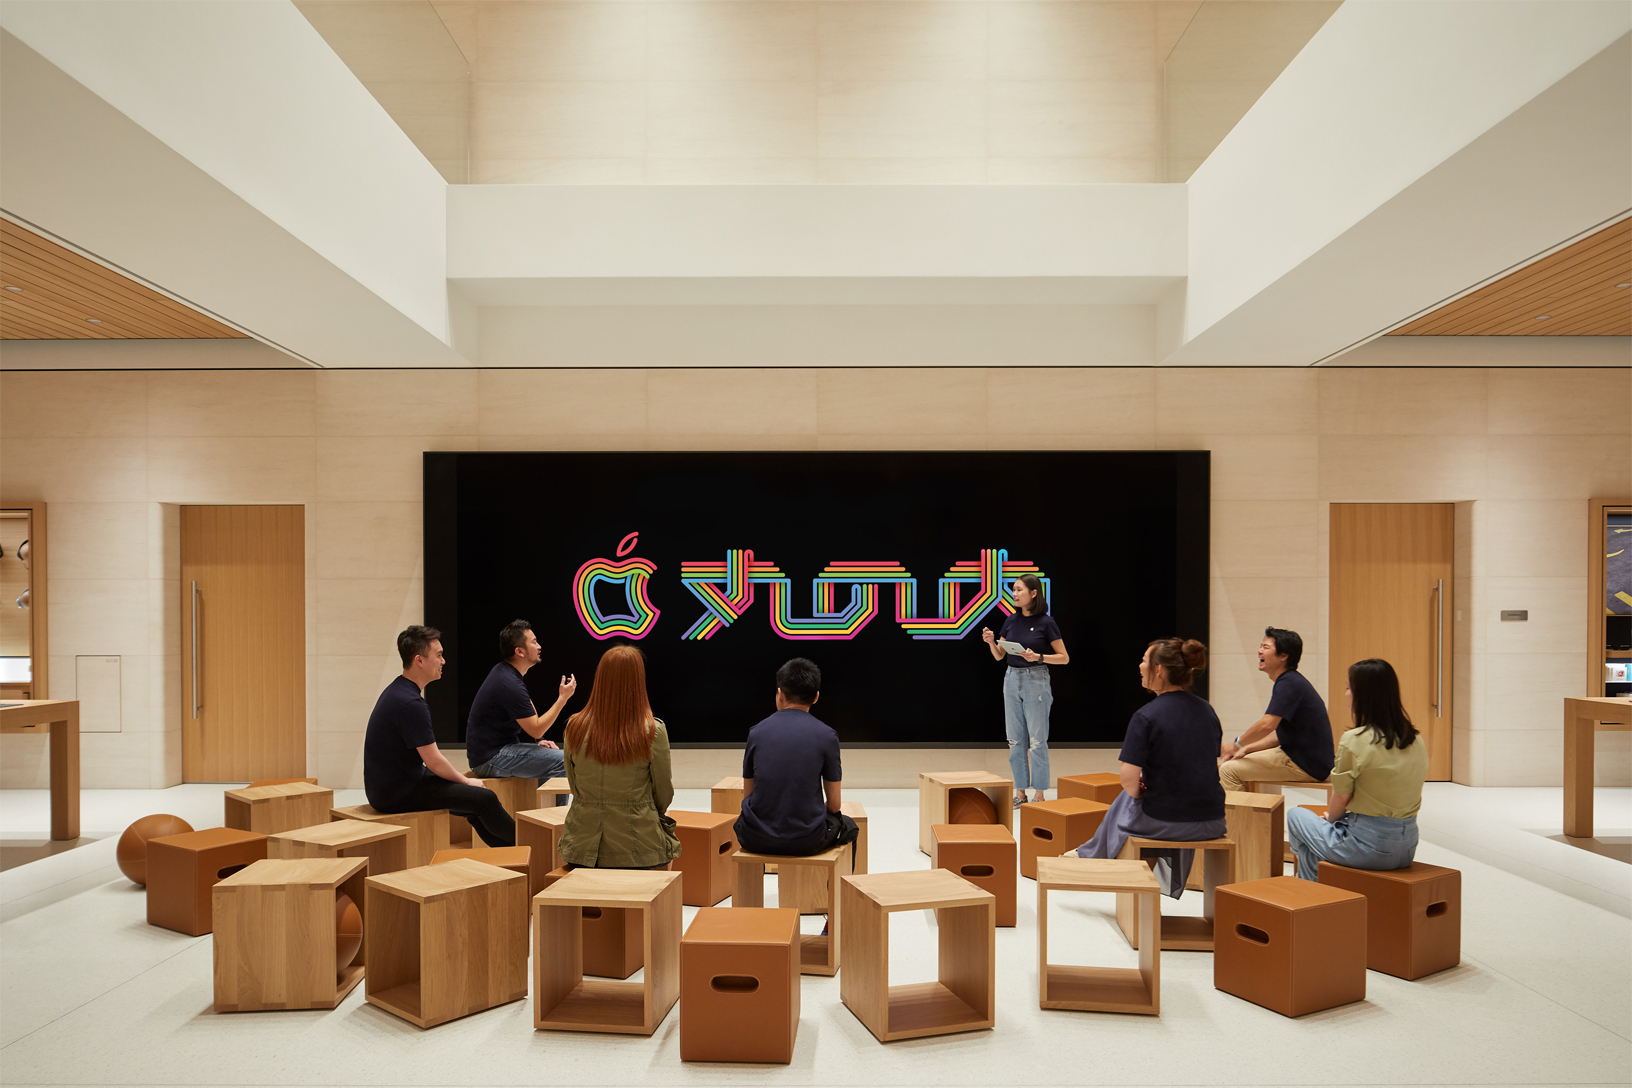 Apple Apple 丸の内 の店内画像を公開 同時に福岡の移転も発表 Purudo Net